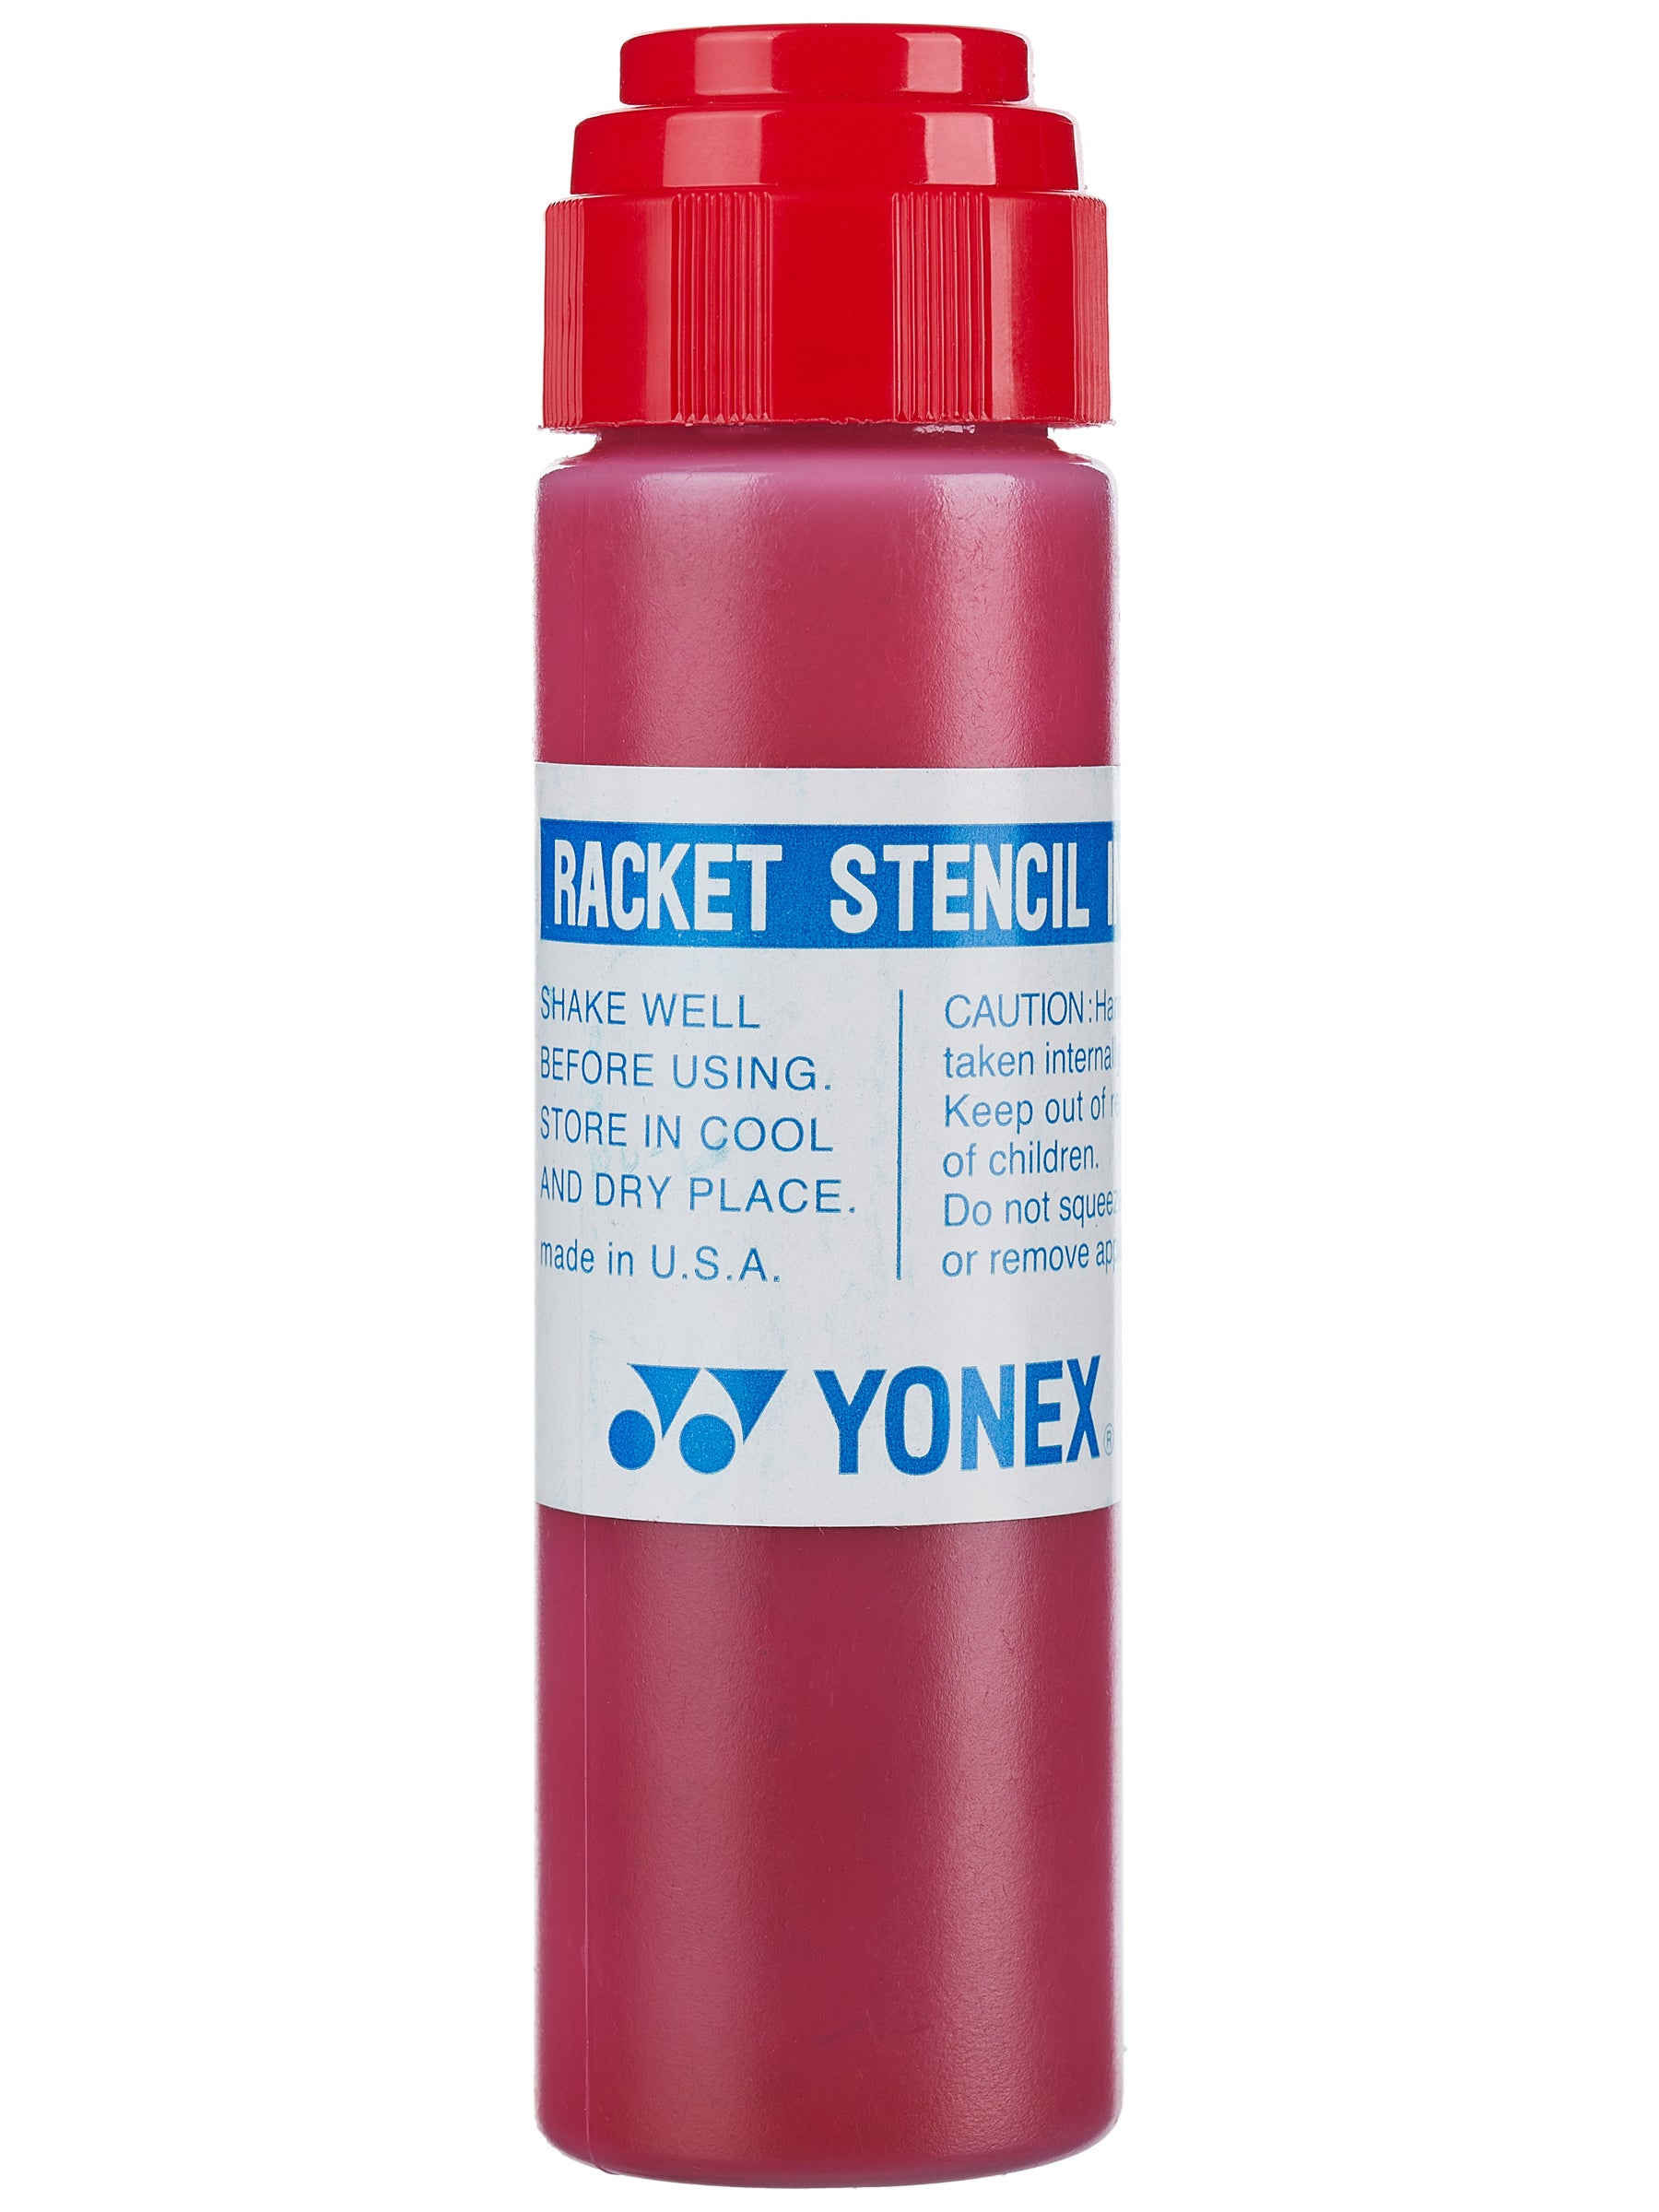 Yonex Badminton Racket Stencil and Red Stencil Ink 